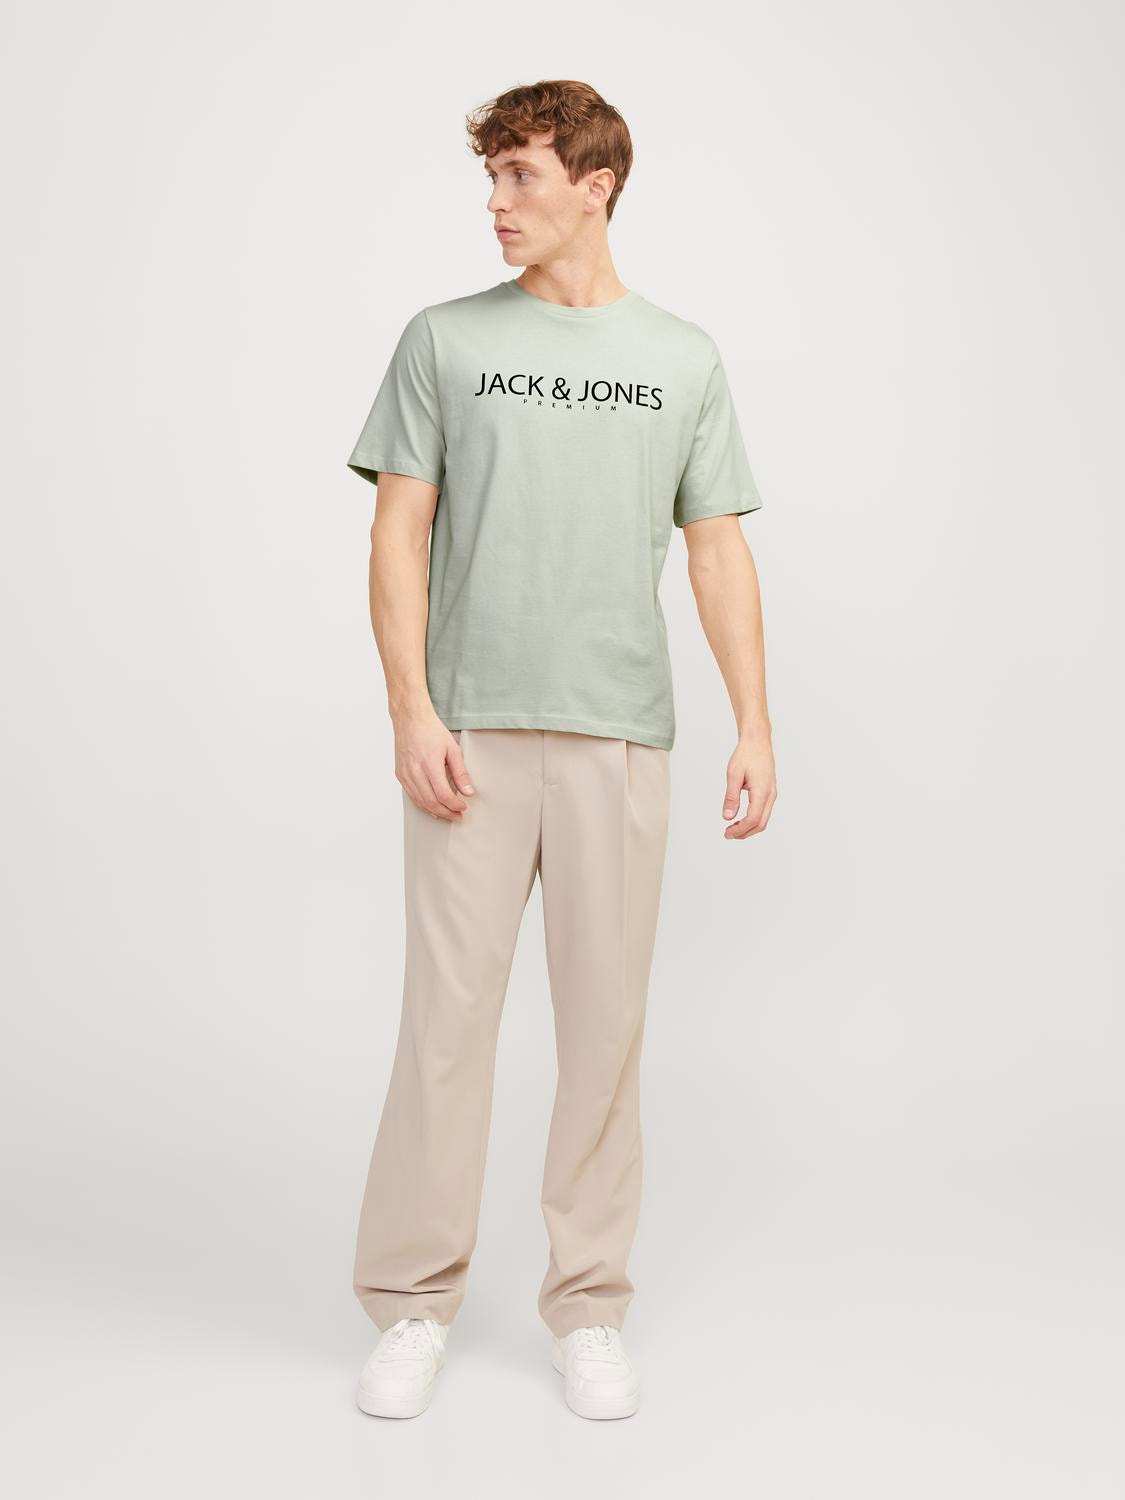 Jack & Jones Camiseta Logotipo Cuello redondo -Green Tint - 12256971